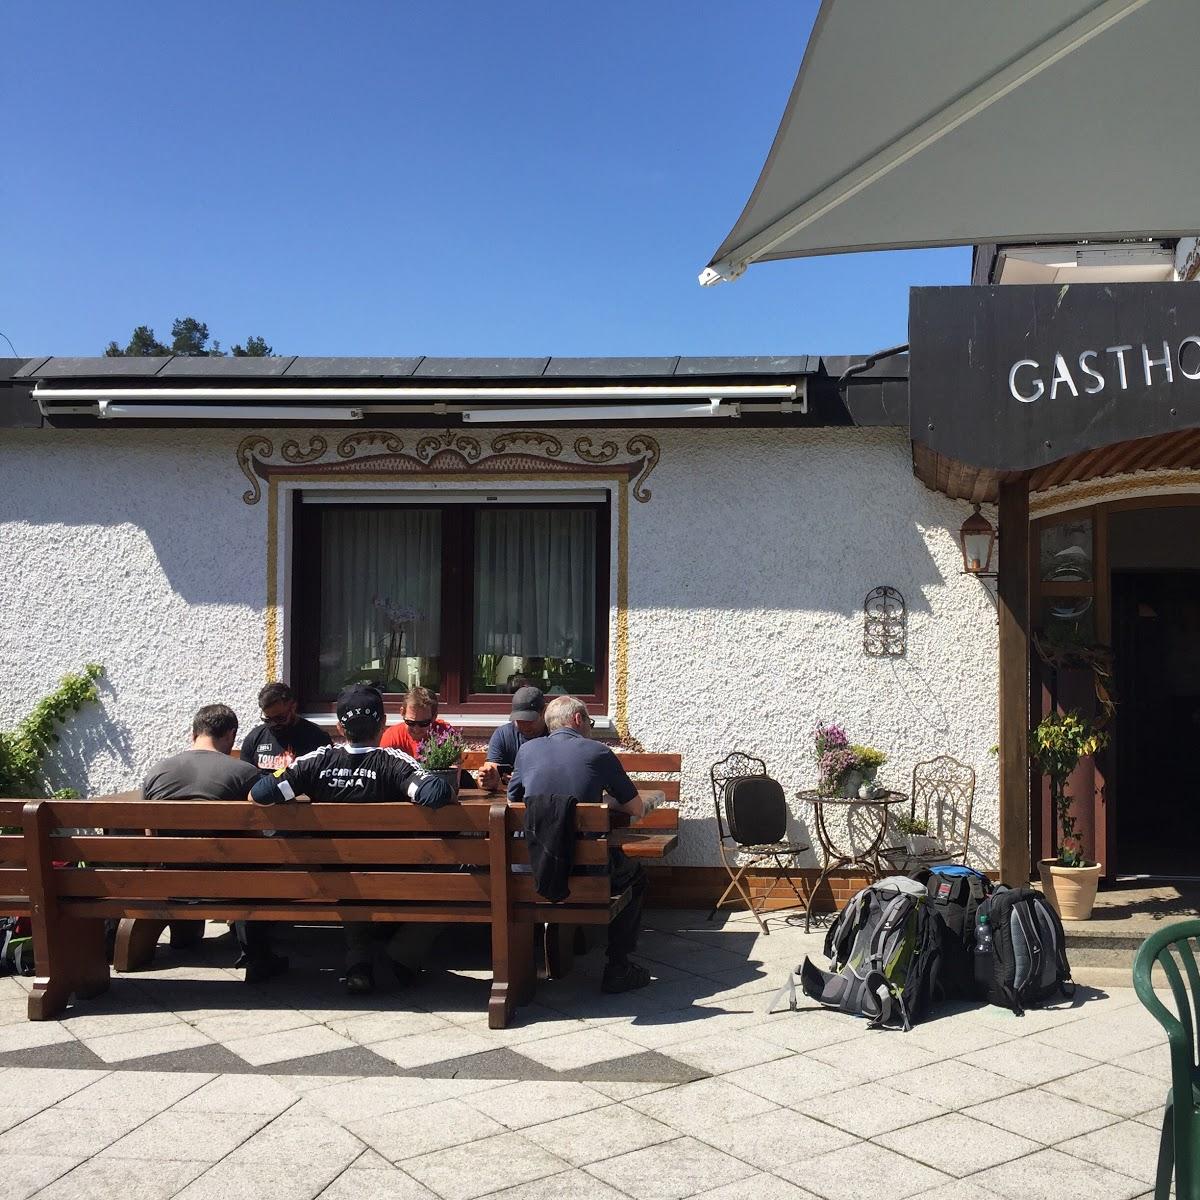 Restaurant "Gasthof Reinbachtal" in  Sulzbach-Rosenberg